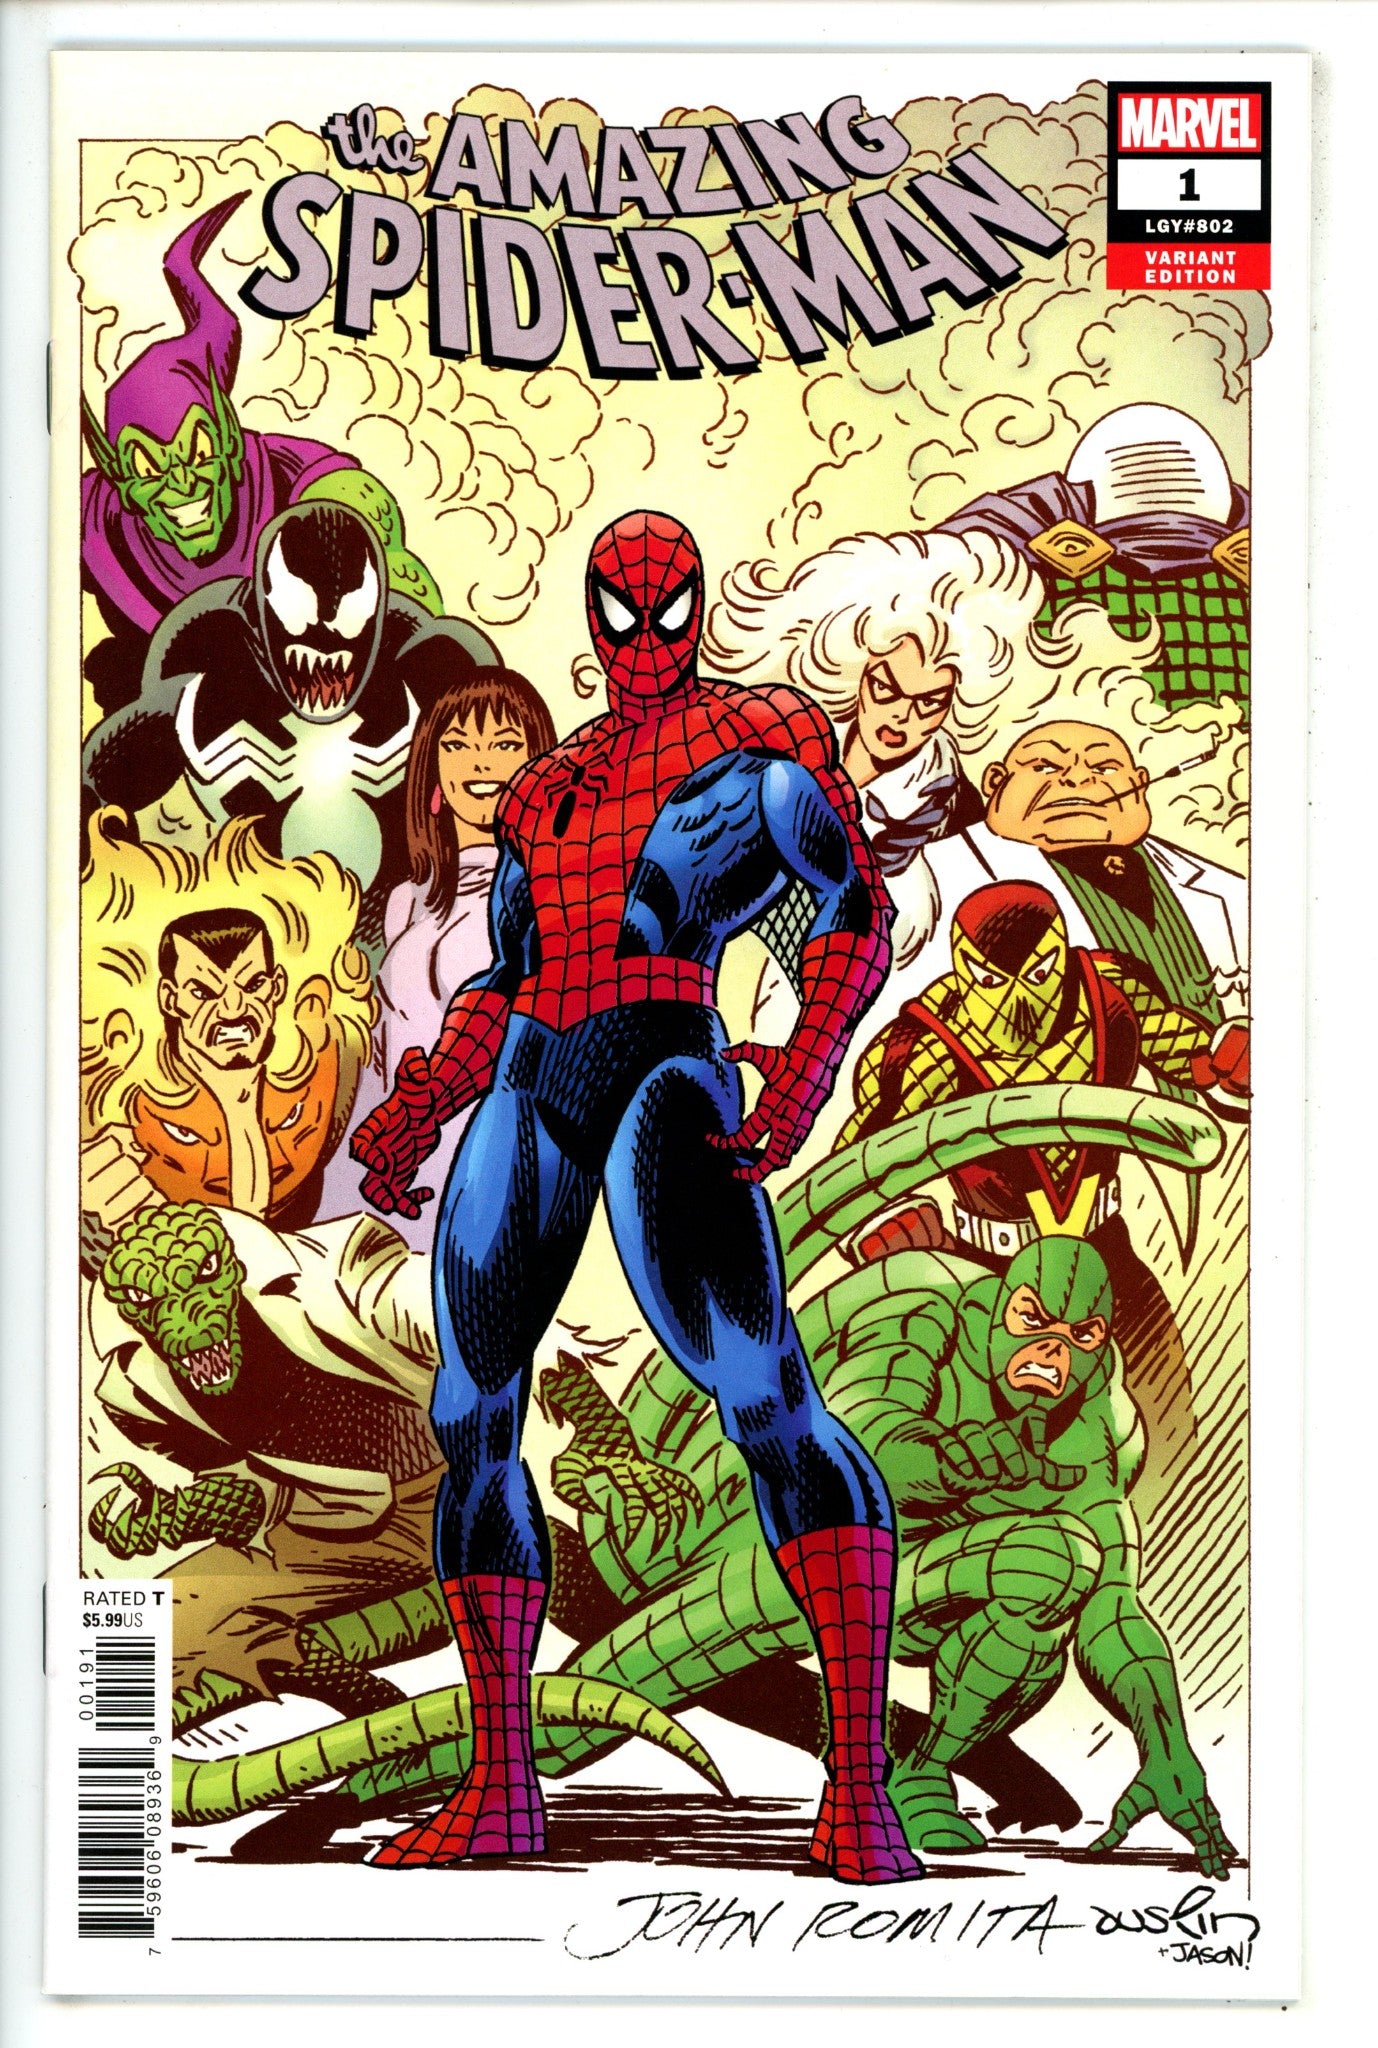 Amazing Spider-Man Vol 4 1 (802) Romita Variant VF+